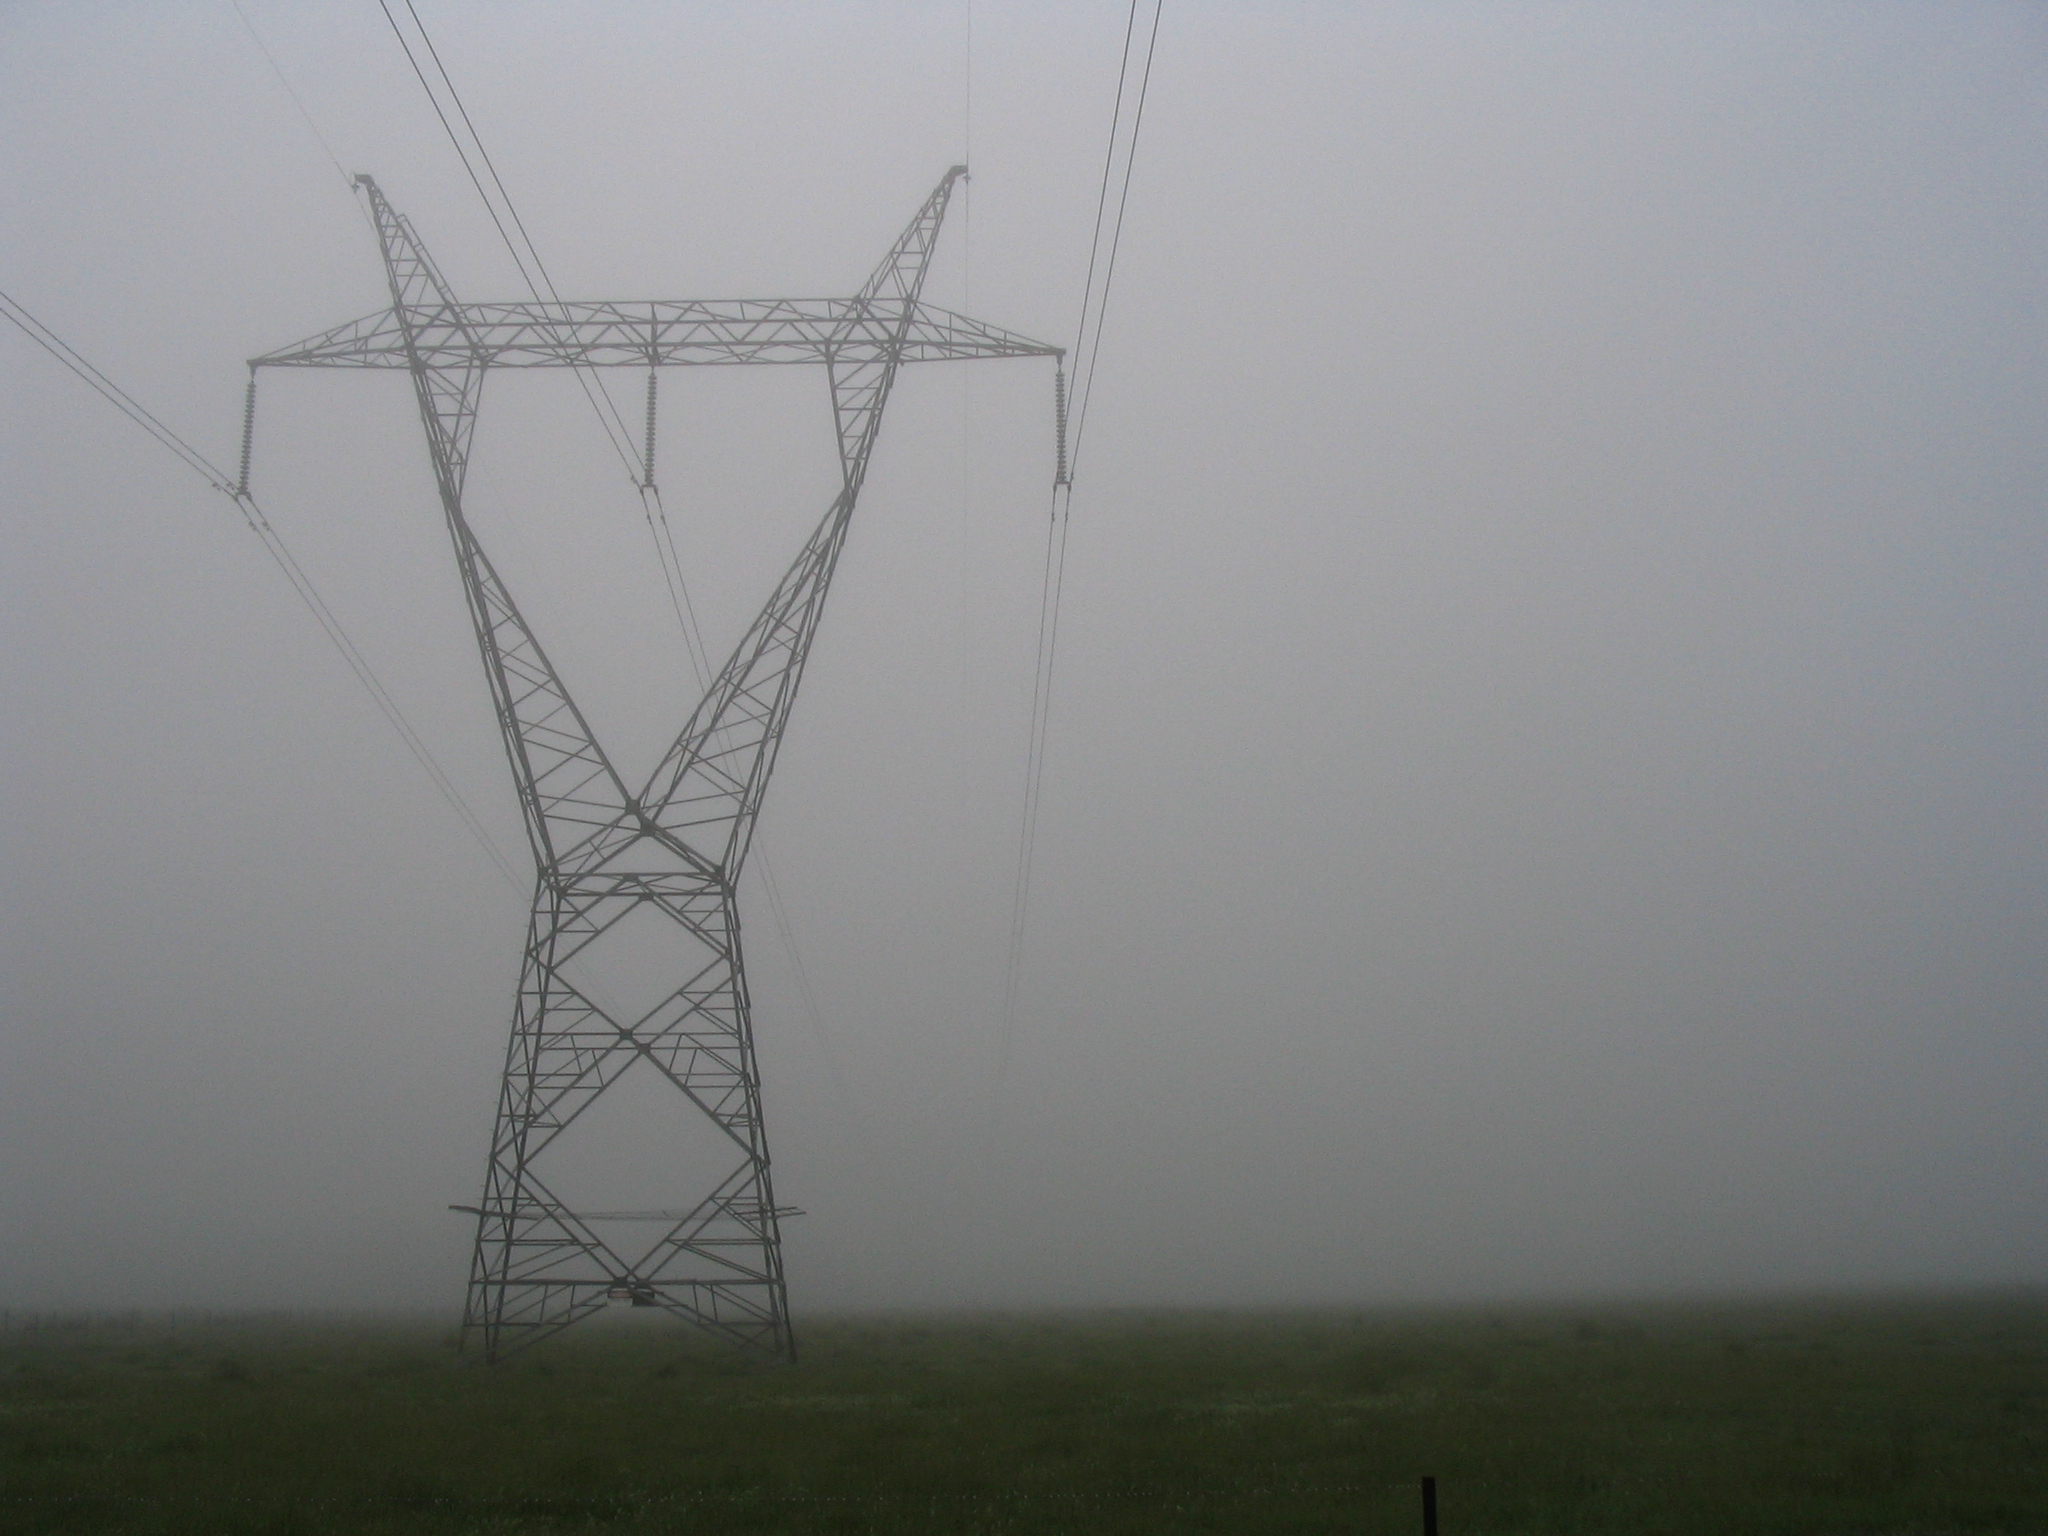 Power pylon in the fog, in a grassy paddock